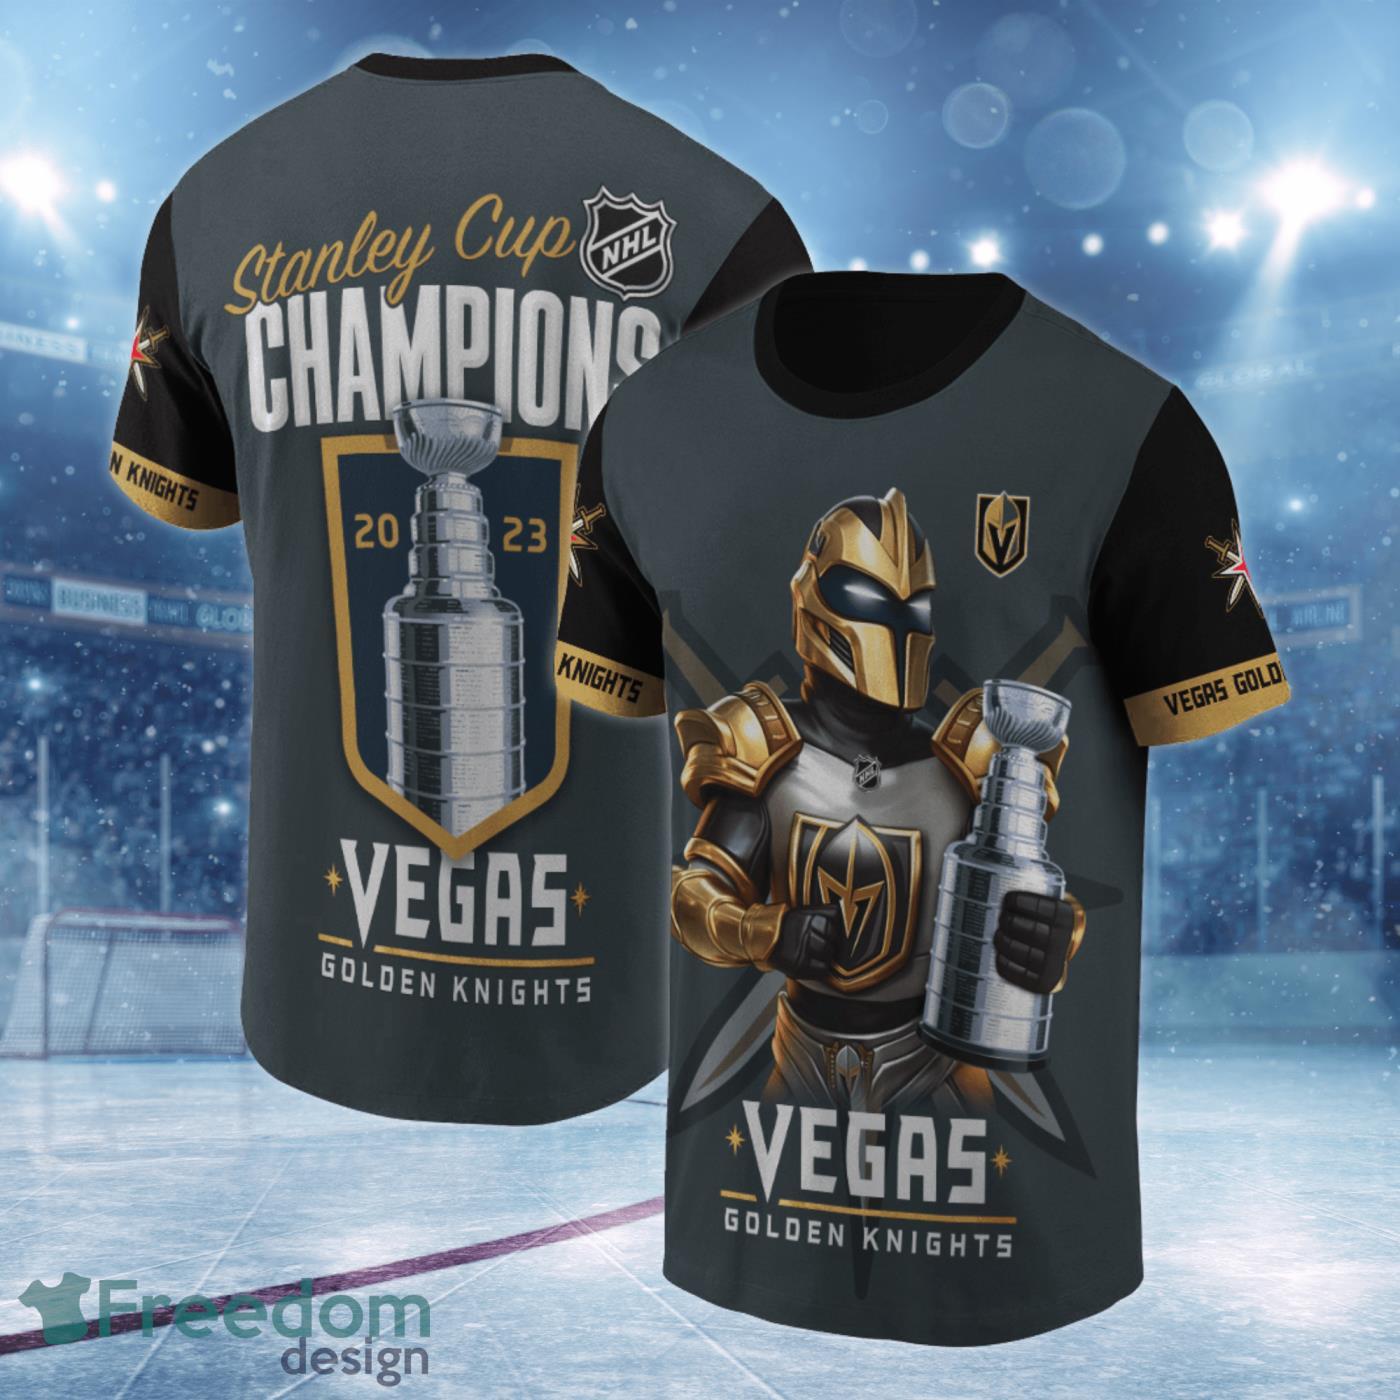 Cheap Vegas Golden Knights Apparel, Discount Knights Gear, NHL Knights  Merchandise On Sale